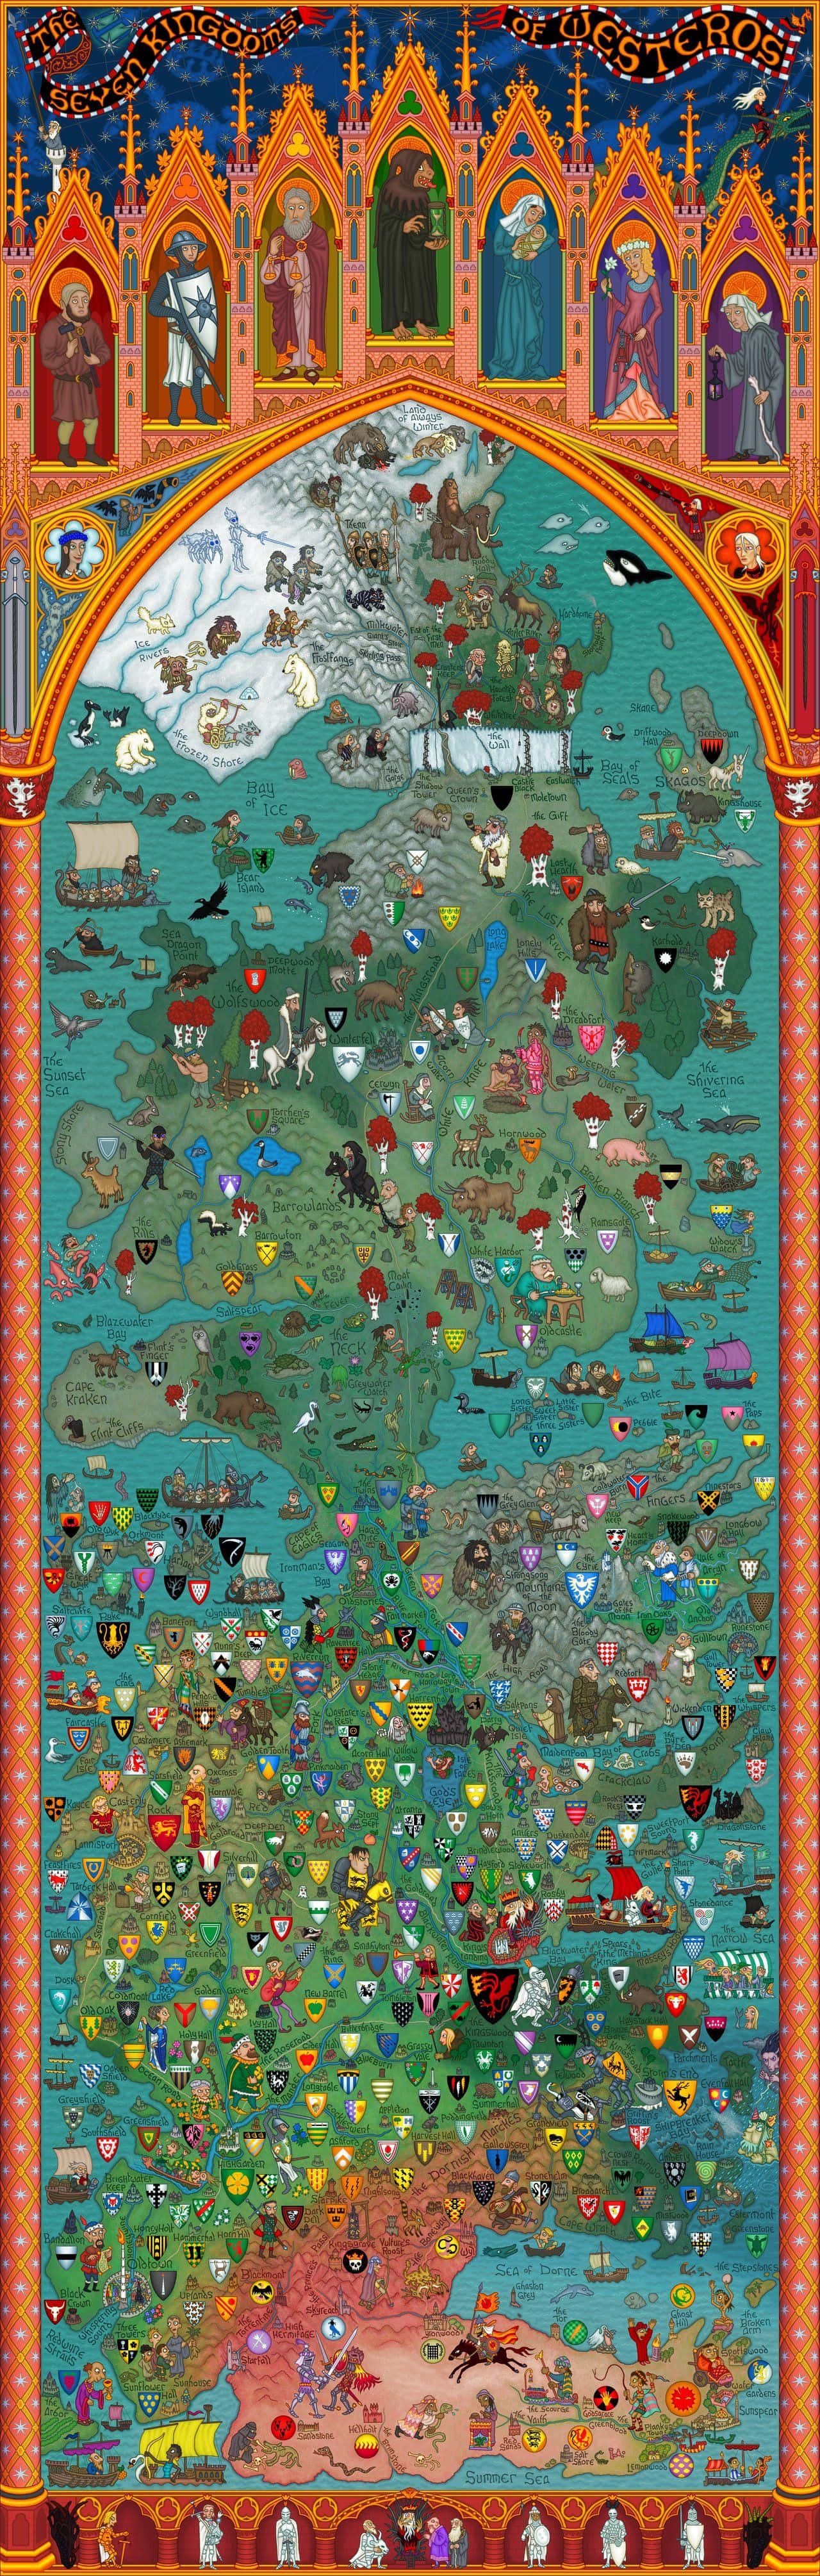 Iconosde Arte Del Mapa De Juego De Tronos Fondo de pantalla